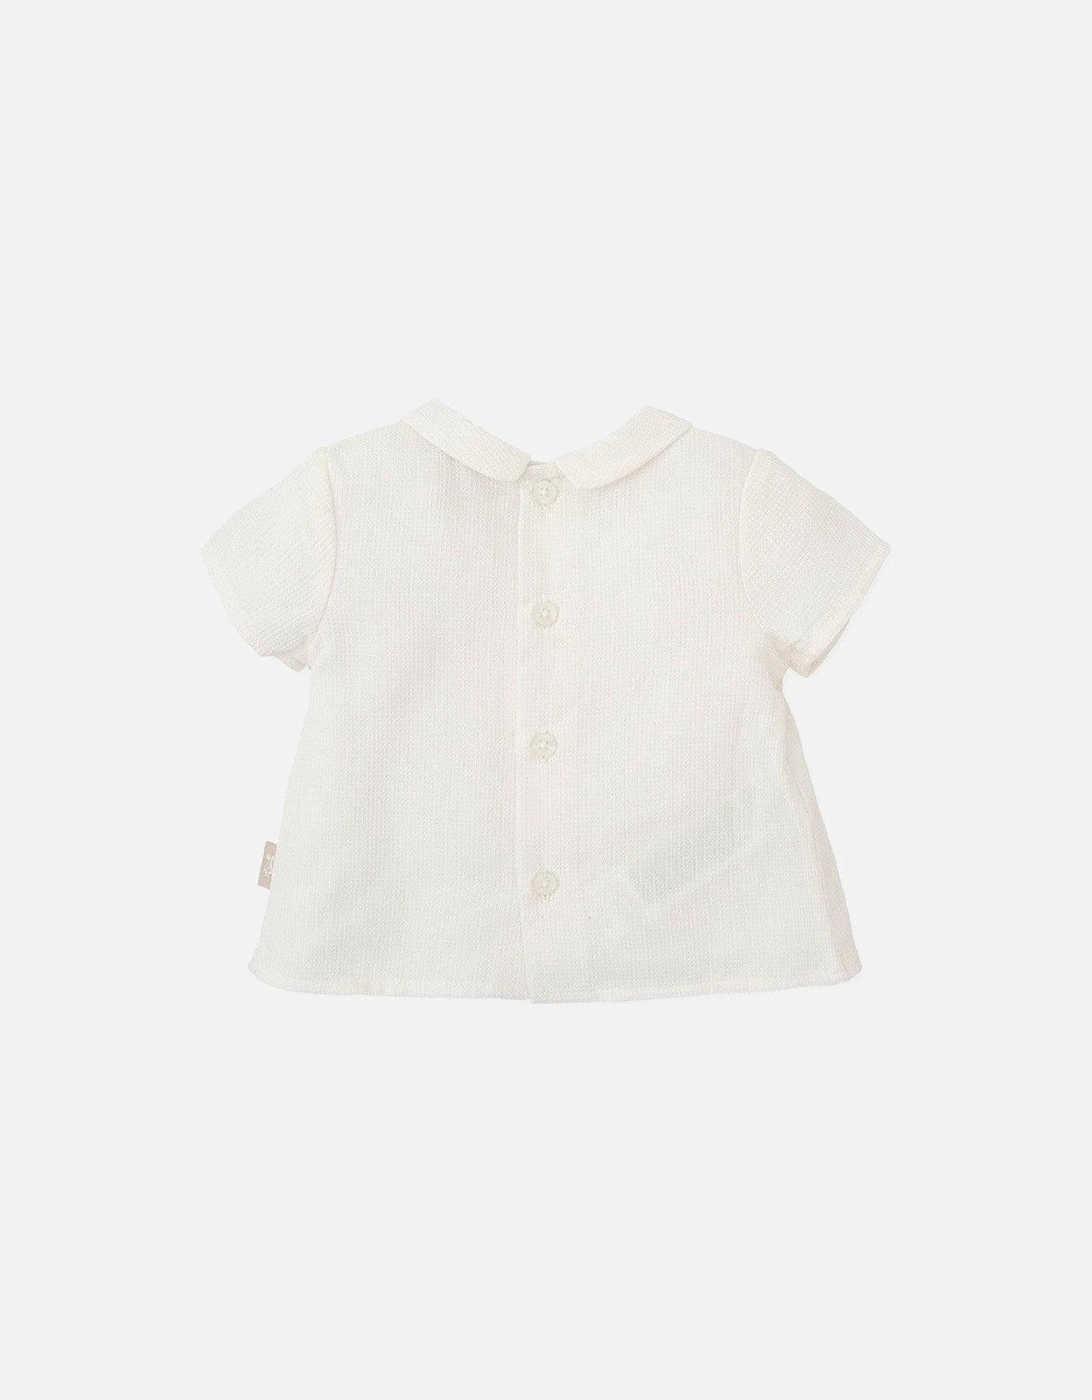 Baby Boys White Linen Shirt